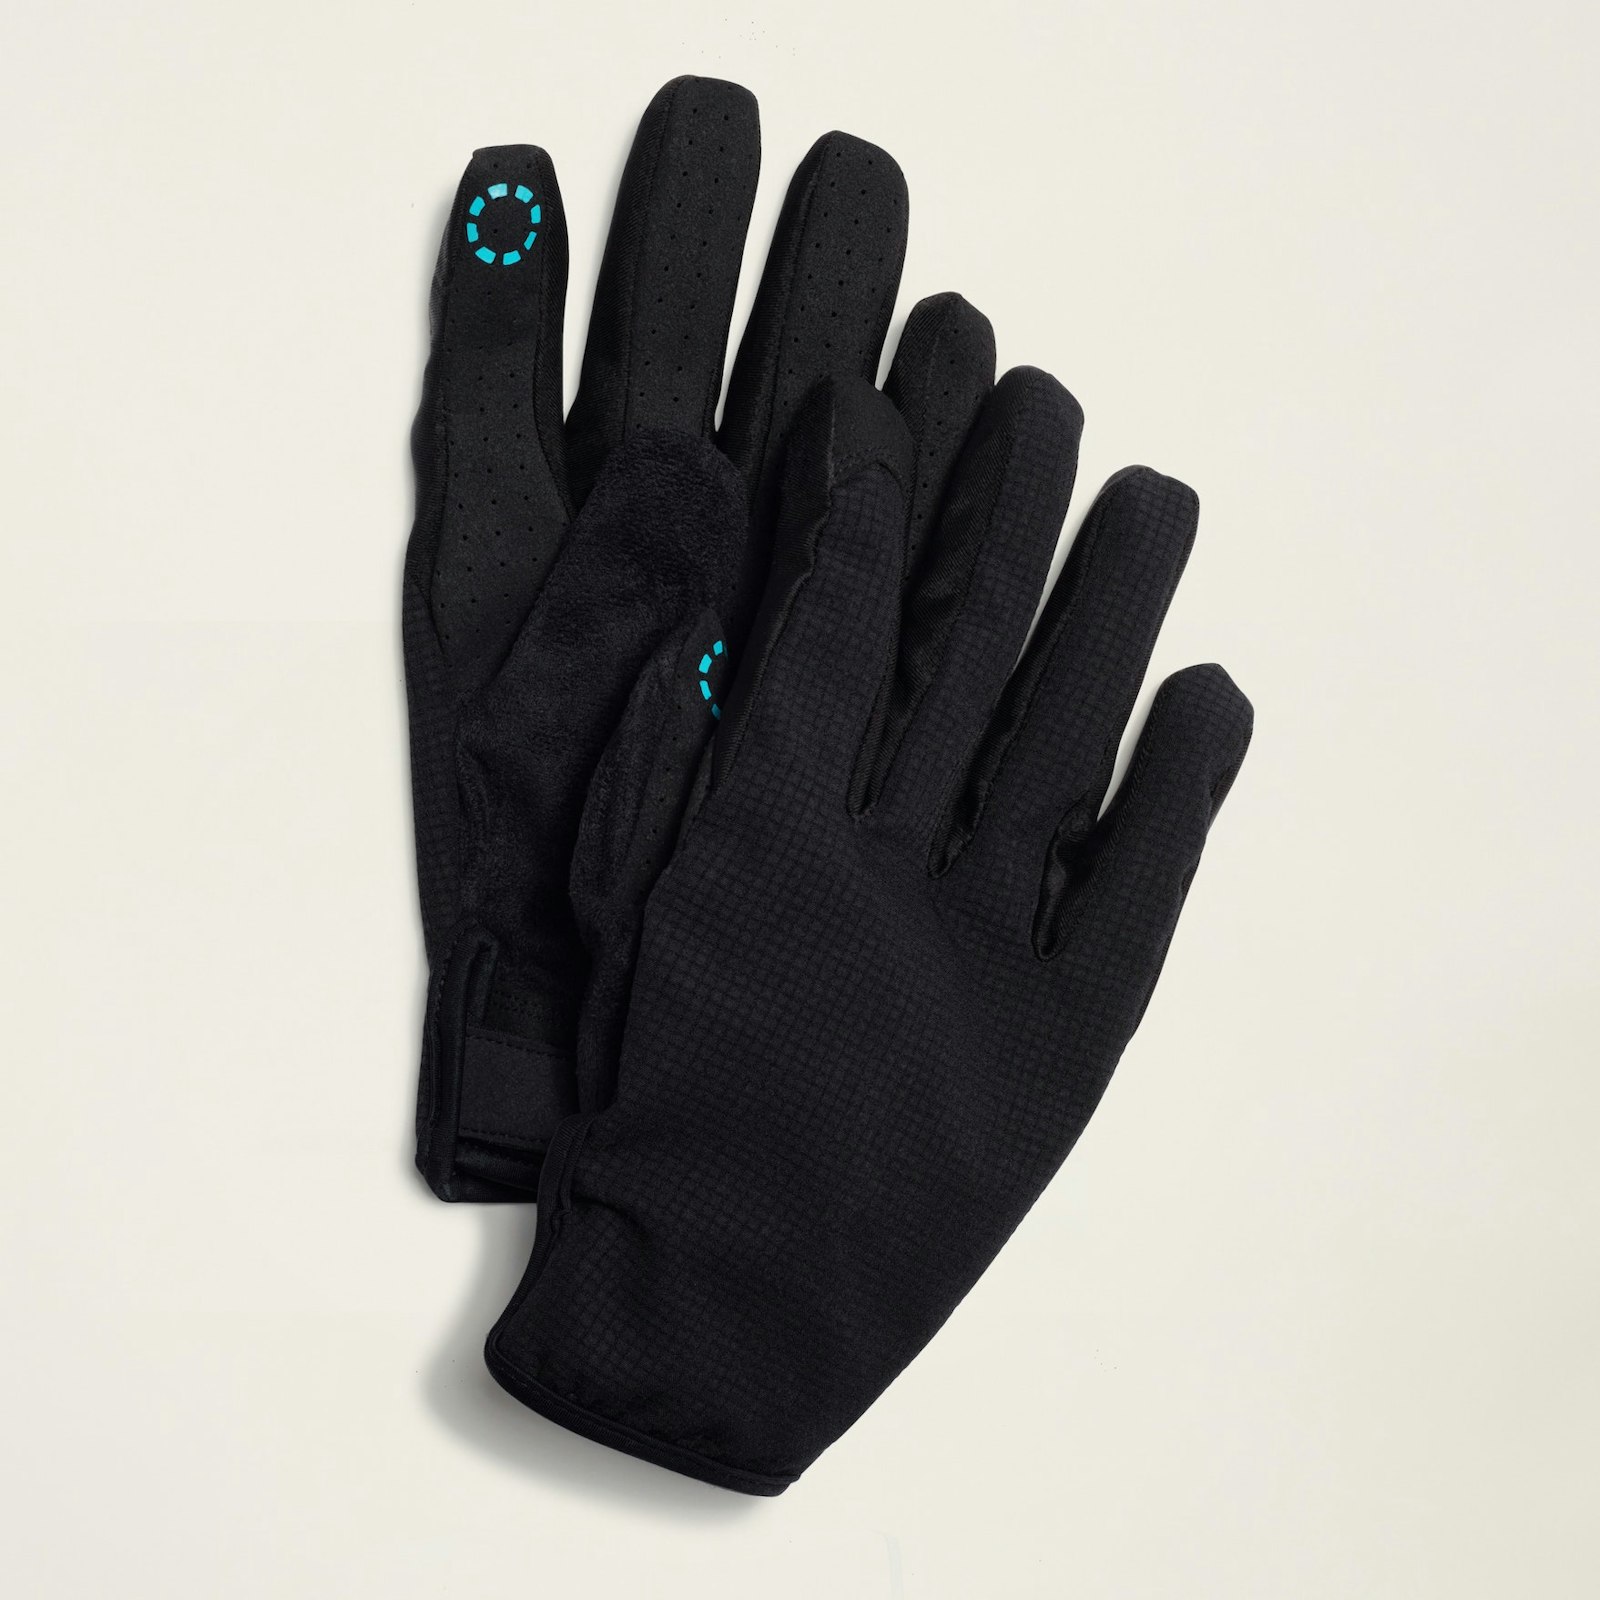 Roadrunner Cycling Gloves